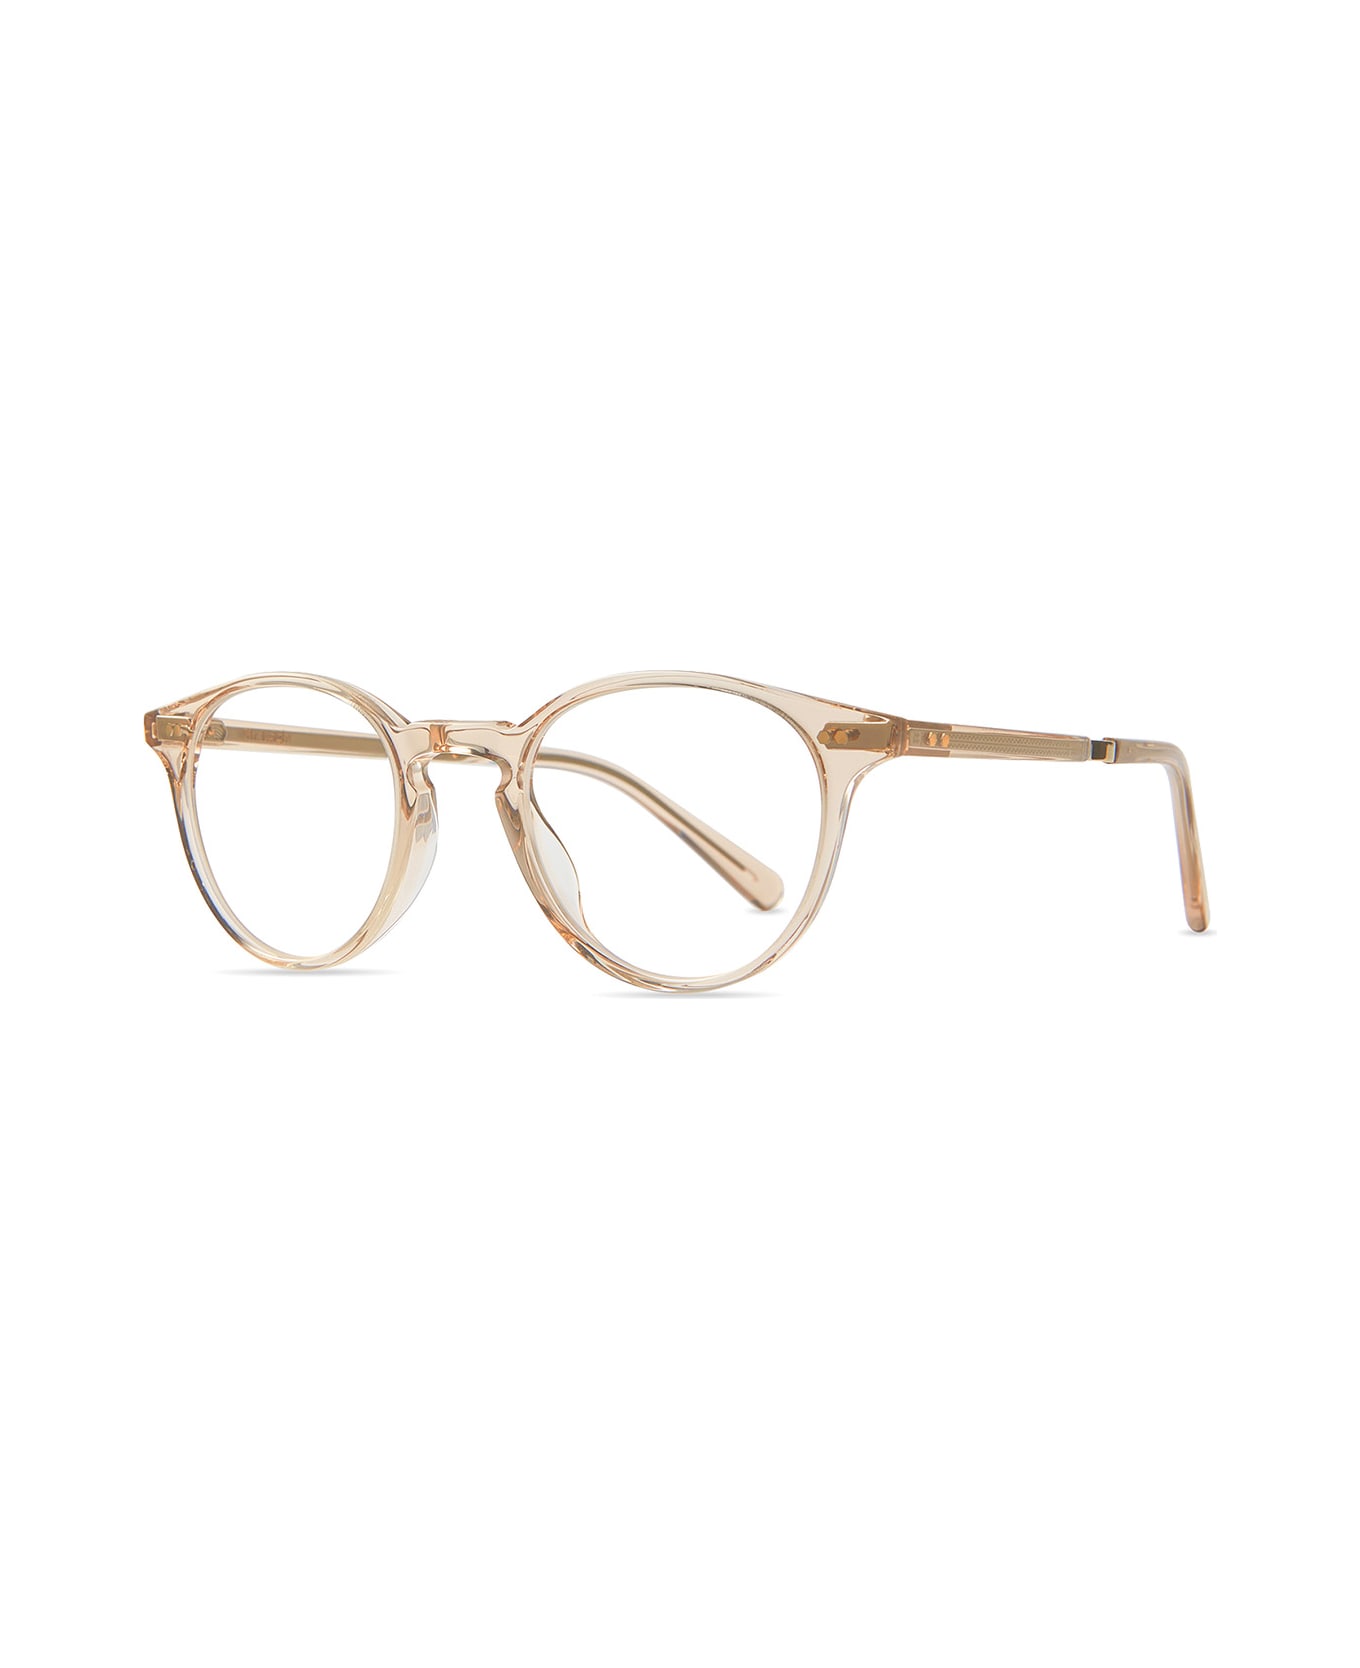 Mr. Leight Marmont C Dune-white Gold Glasses - Dune-White Gold